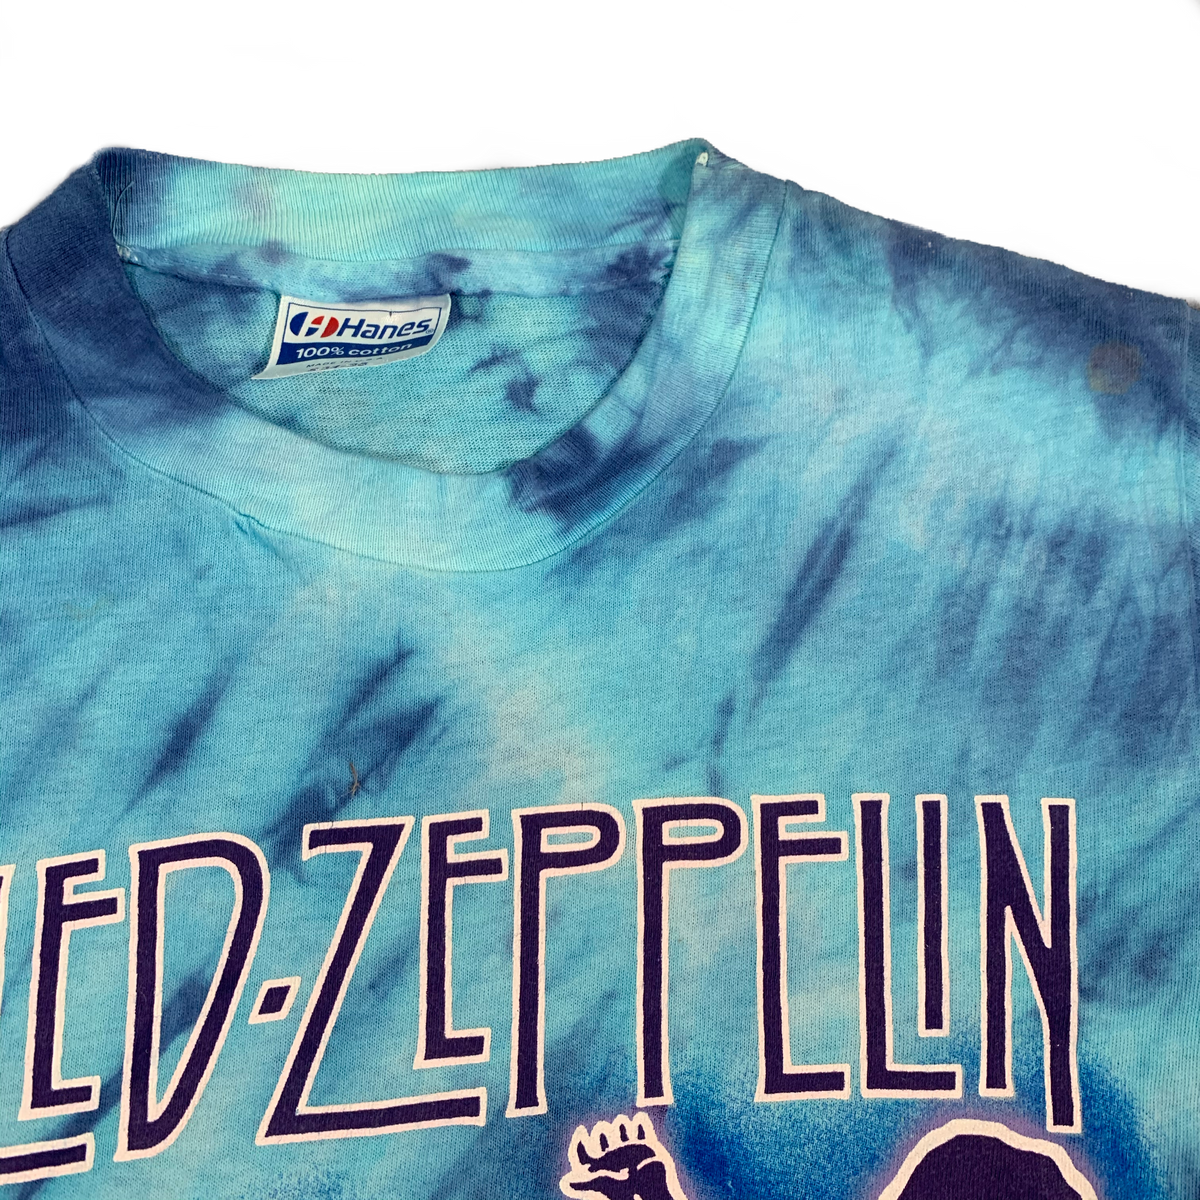 Vintage Led Zeppelin &quot;Tie-Dyed&quot; 1984 T-Shirt - jointcustodydc